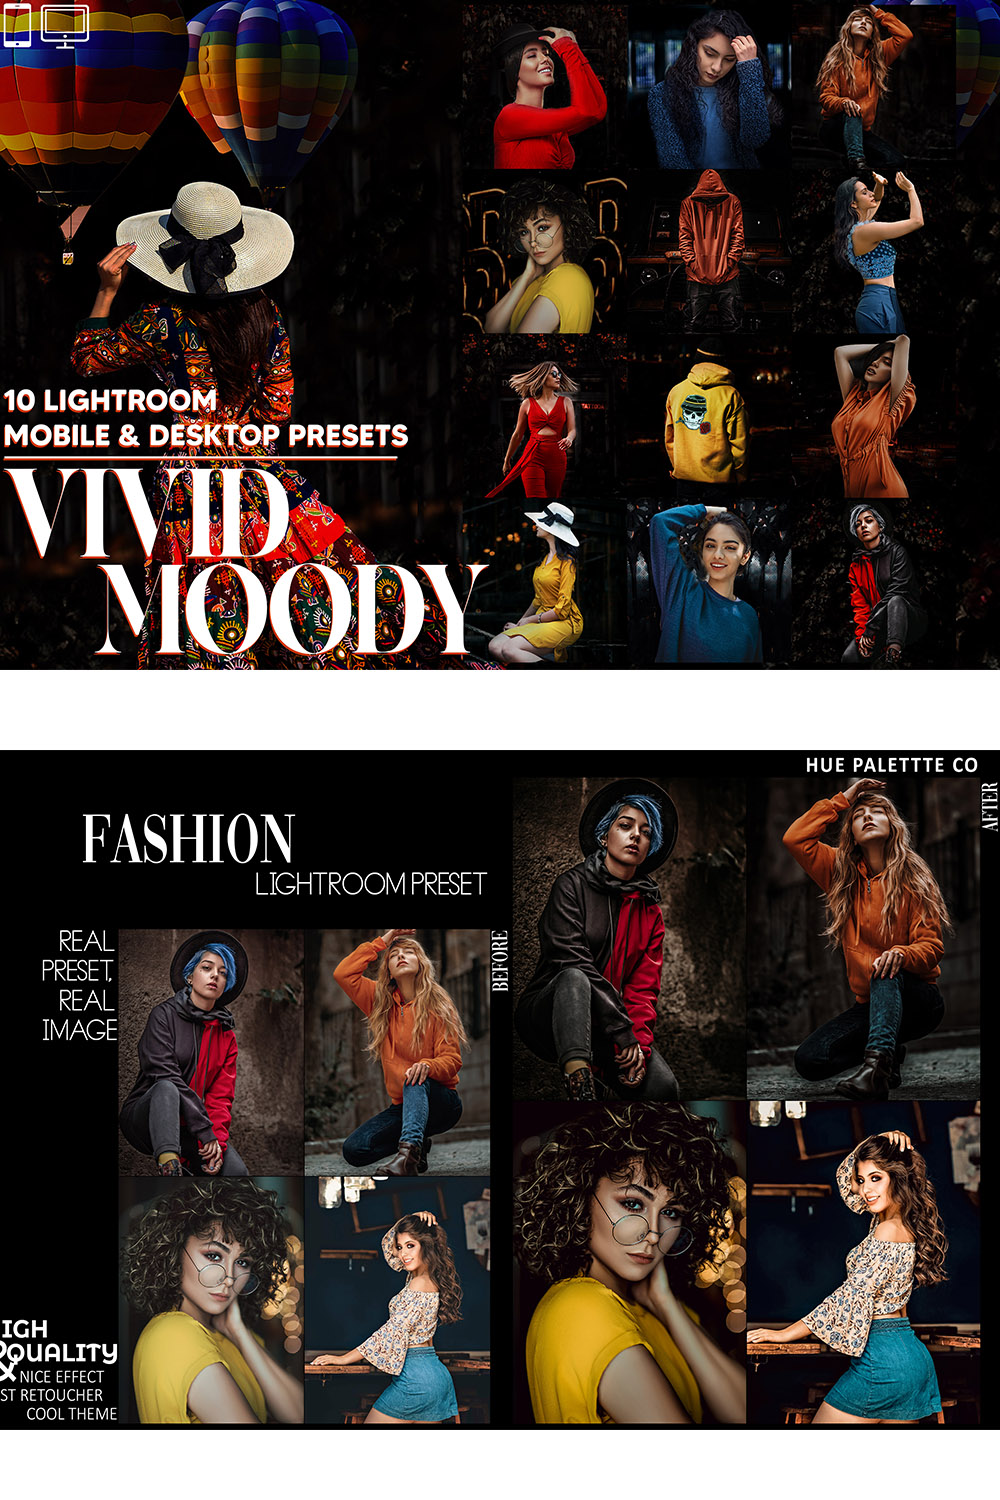 10 Vivid Moody Lightroom Presets, Dark Colorful Mobile Preset, Rich Deep Vibrant Desktop, Portrait Lifestyle Theme Instagram LR Filter DNG pinterest preview image.